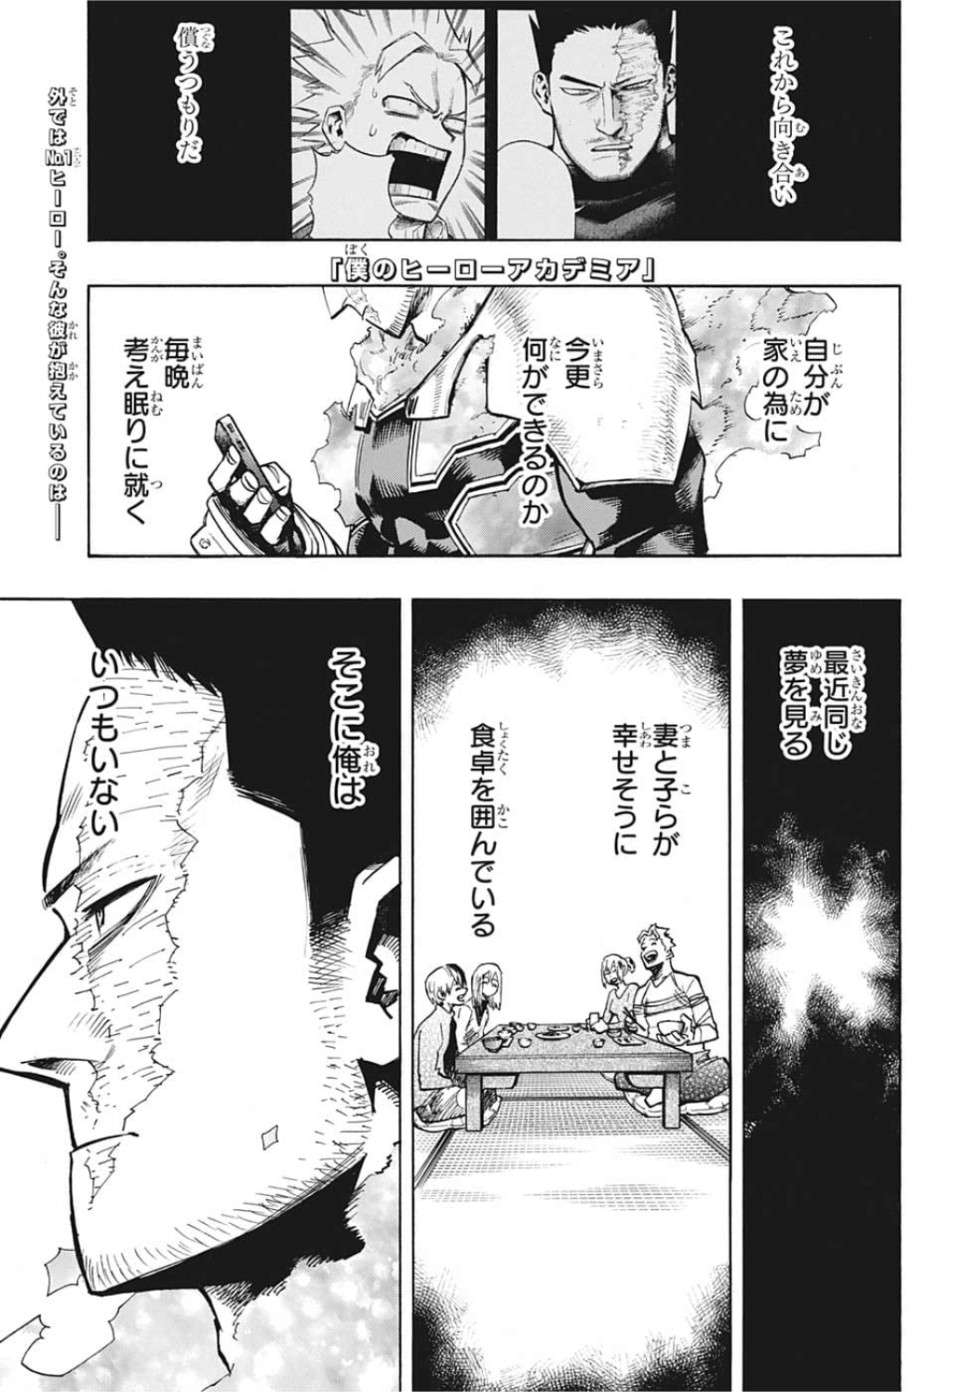 Boku no Hero Academia - Chapter 249 - Page 1